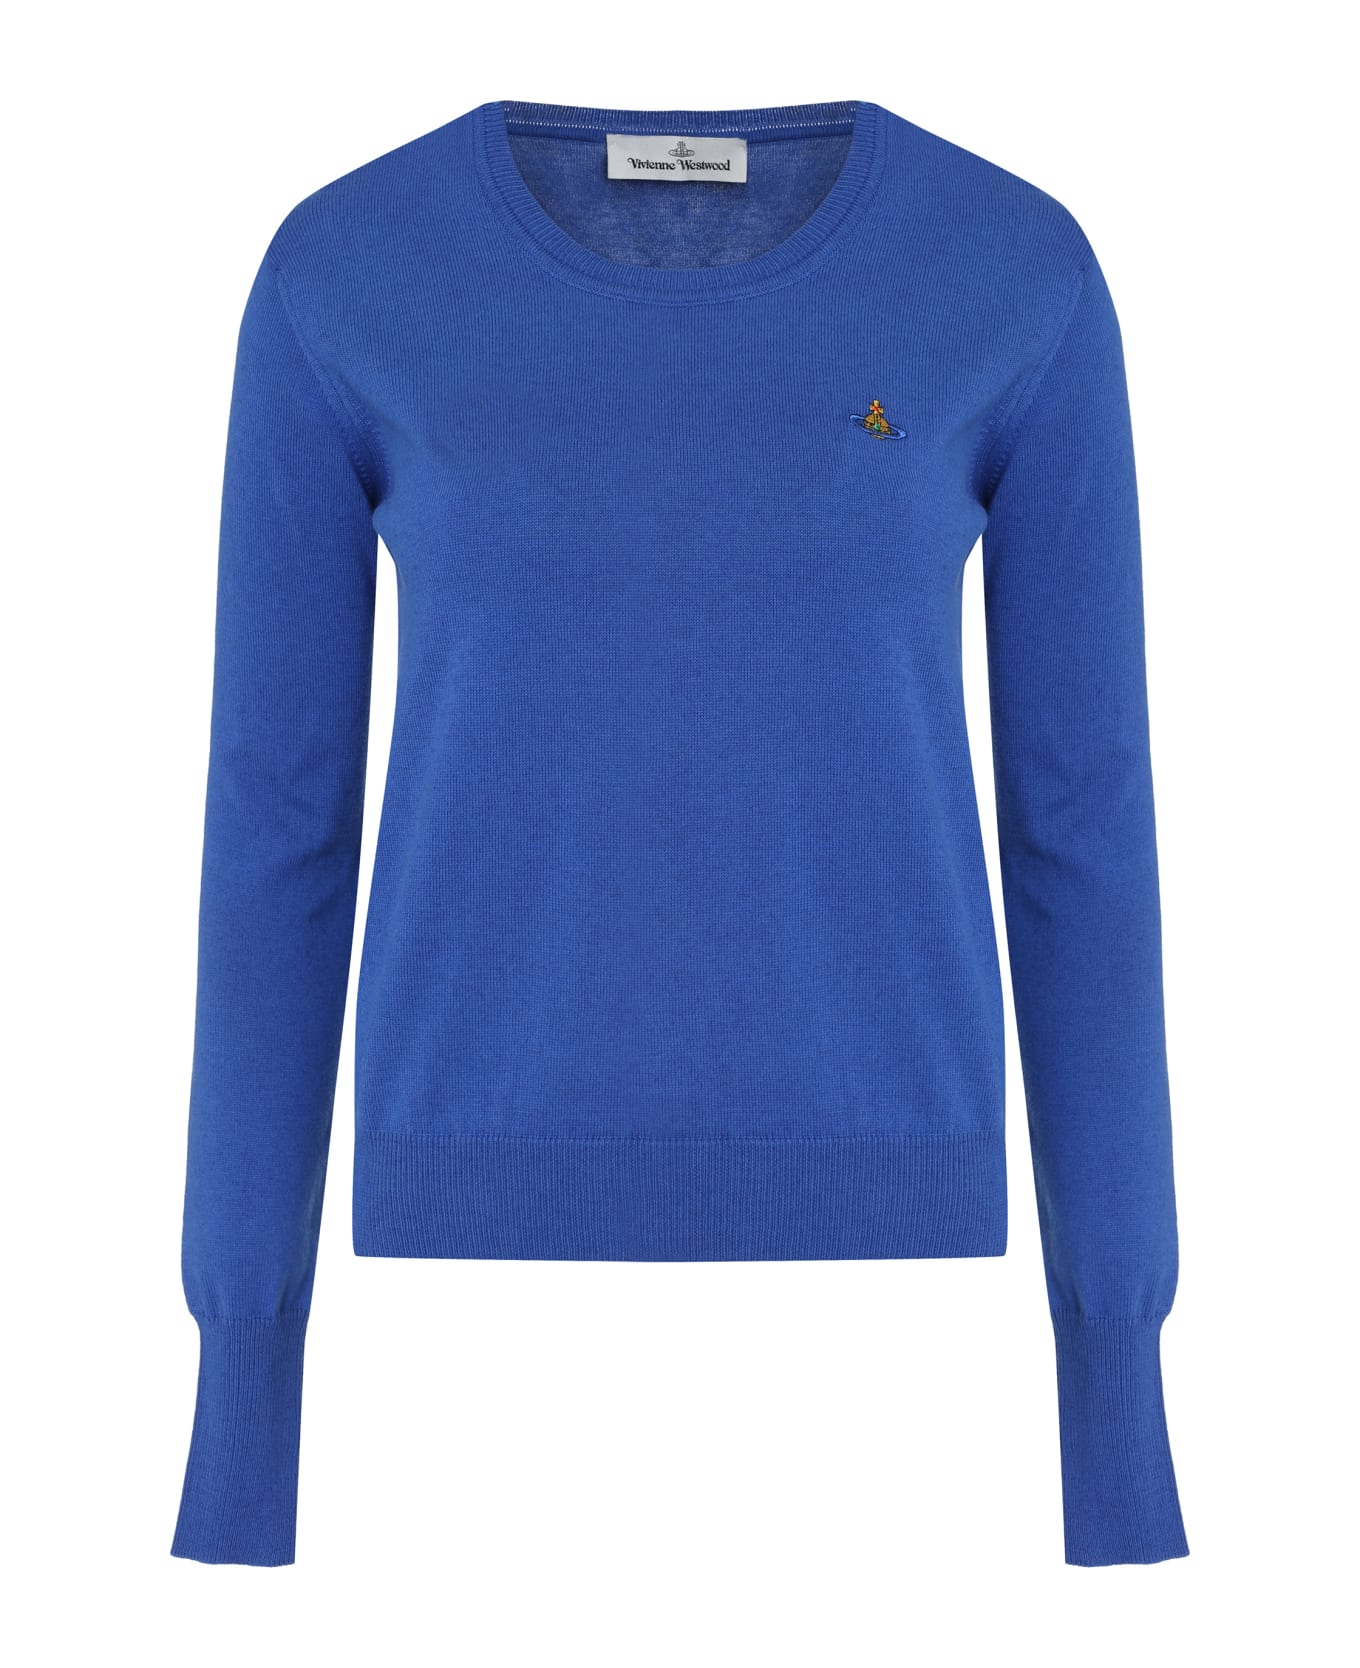 Vivienne Westwood Bea Crew-neck Cashmere Sweater - blue